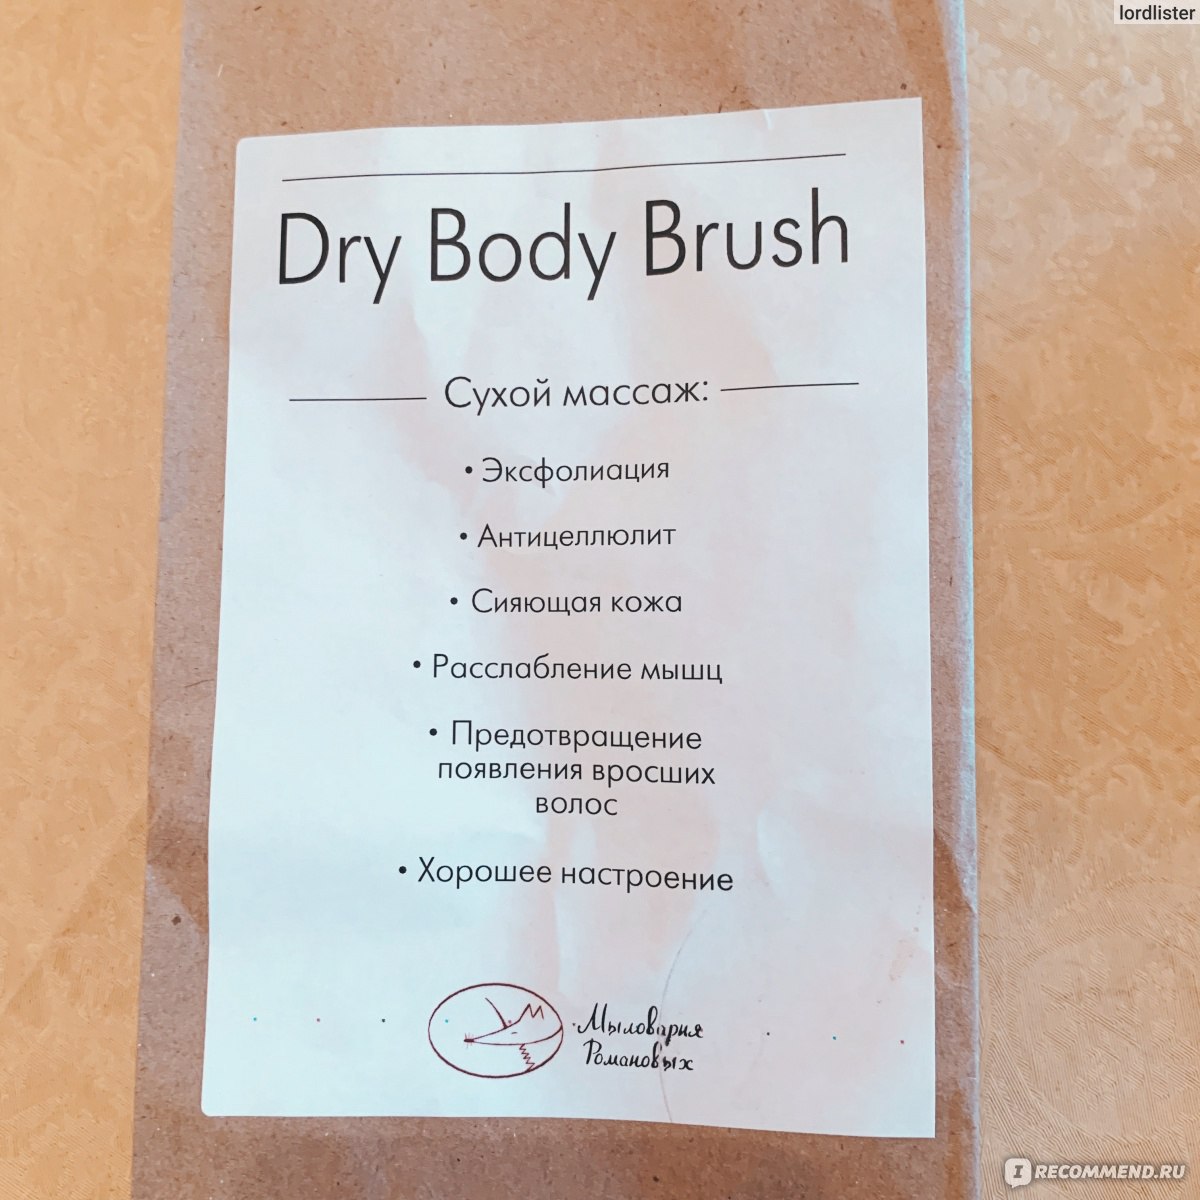 Щетка для сухого массажа Мыловарня Романовых Dry Body Brush фото